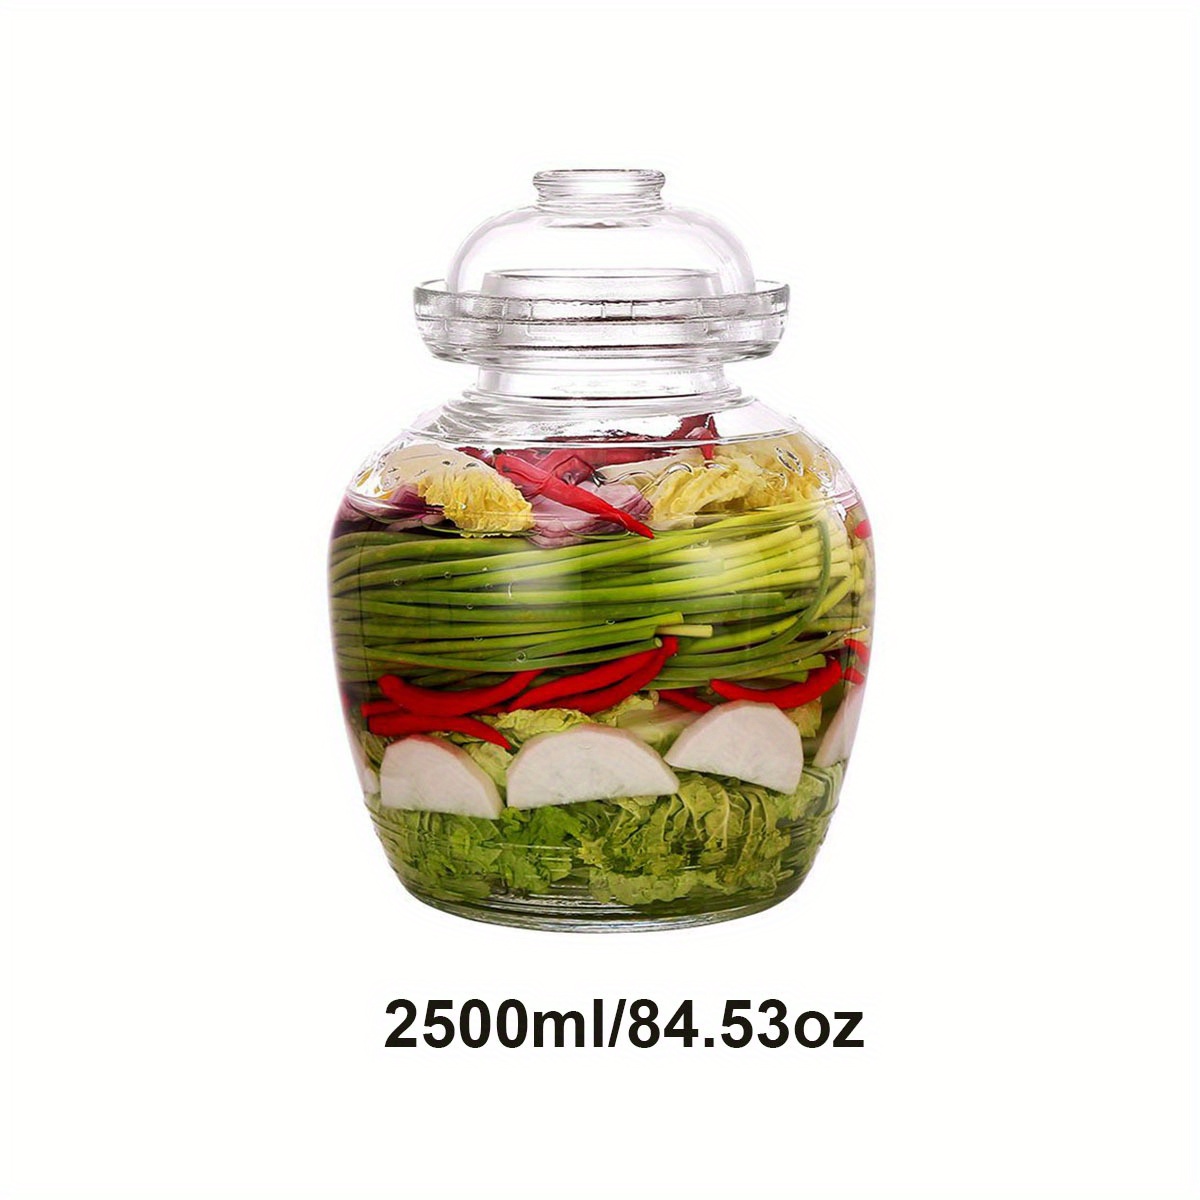 1pc 2500ml 84 53oz glass jar with lid fermentation jar traditional fermenting kit crock with water seal airlock lid pickle jar for pickles paocai sauerkraut wine brewing and kombucha